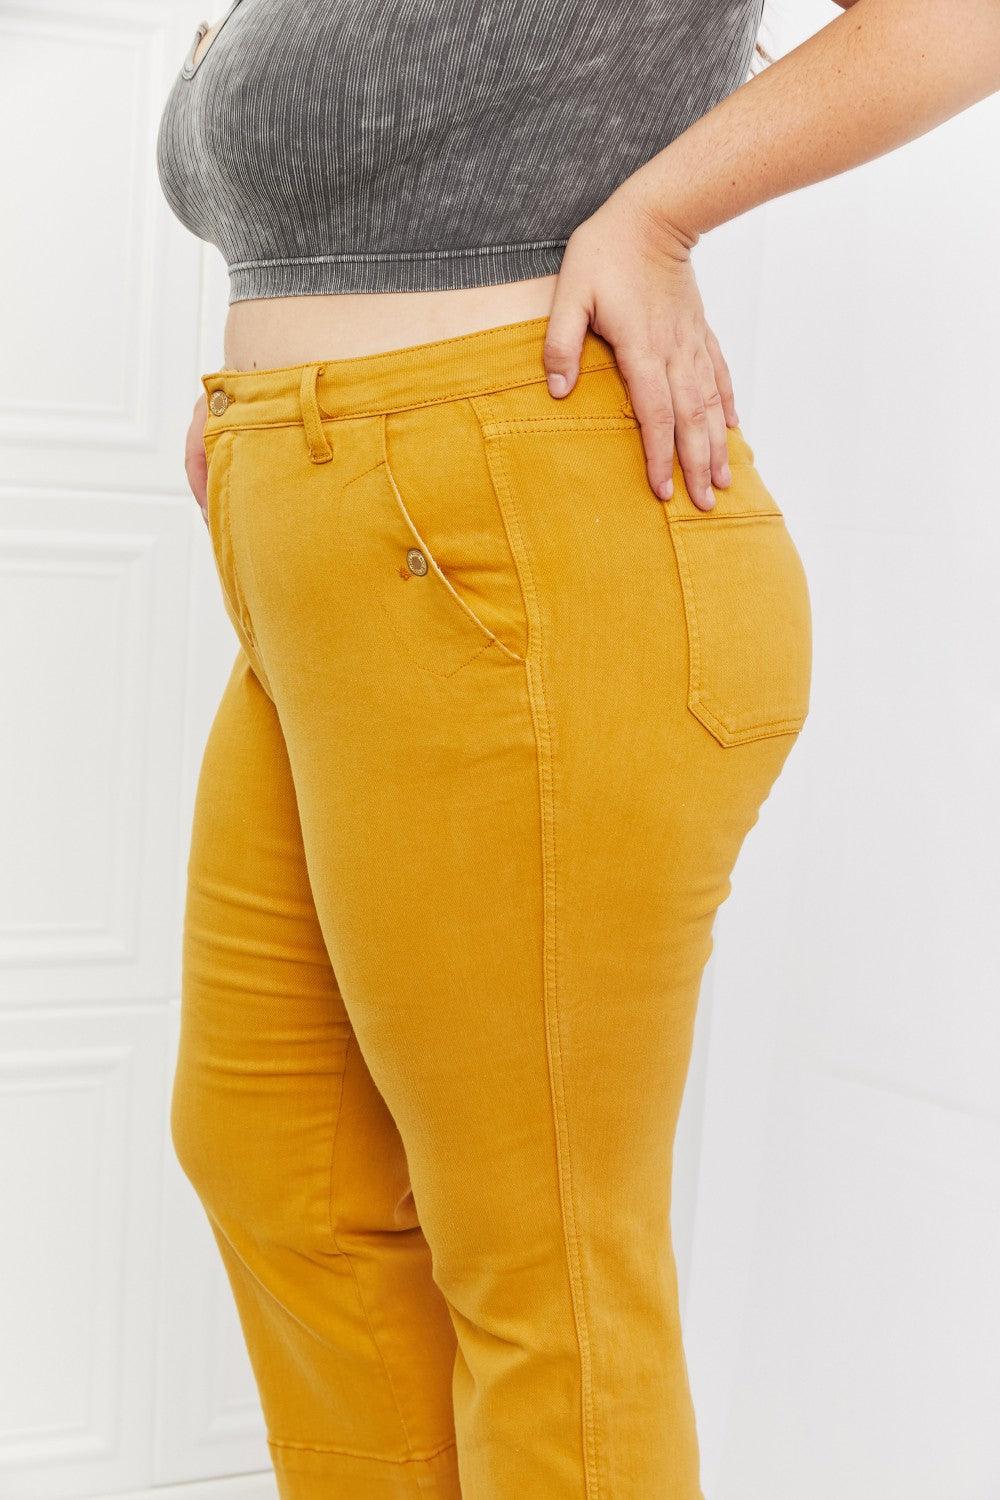 Judy Blue Jayza Full Size Straight Leg Cropped Jeans - The Fiery Jasmine